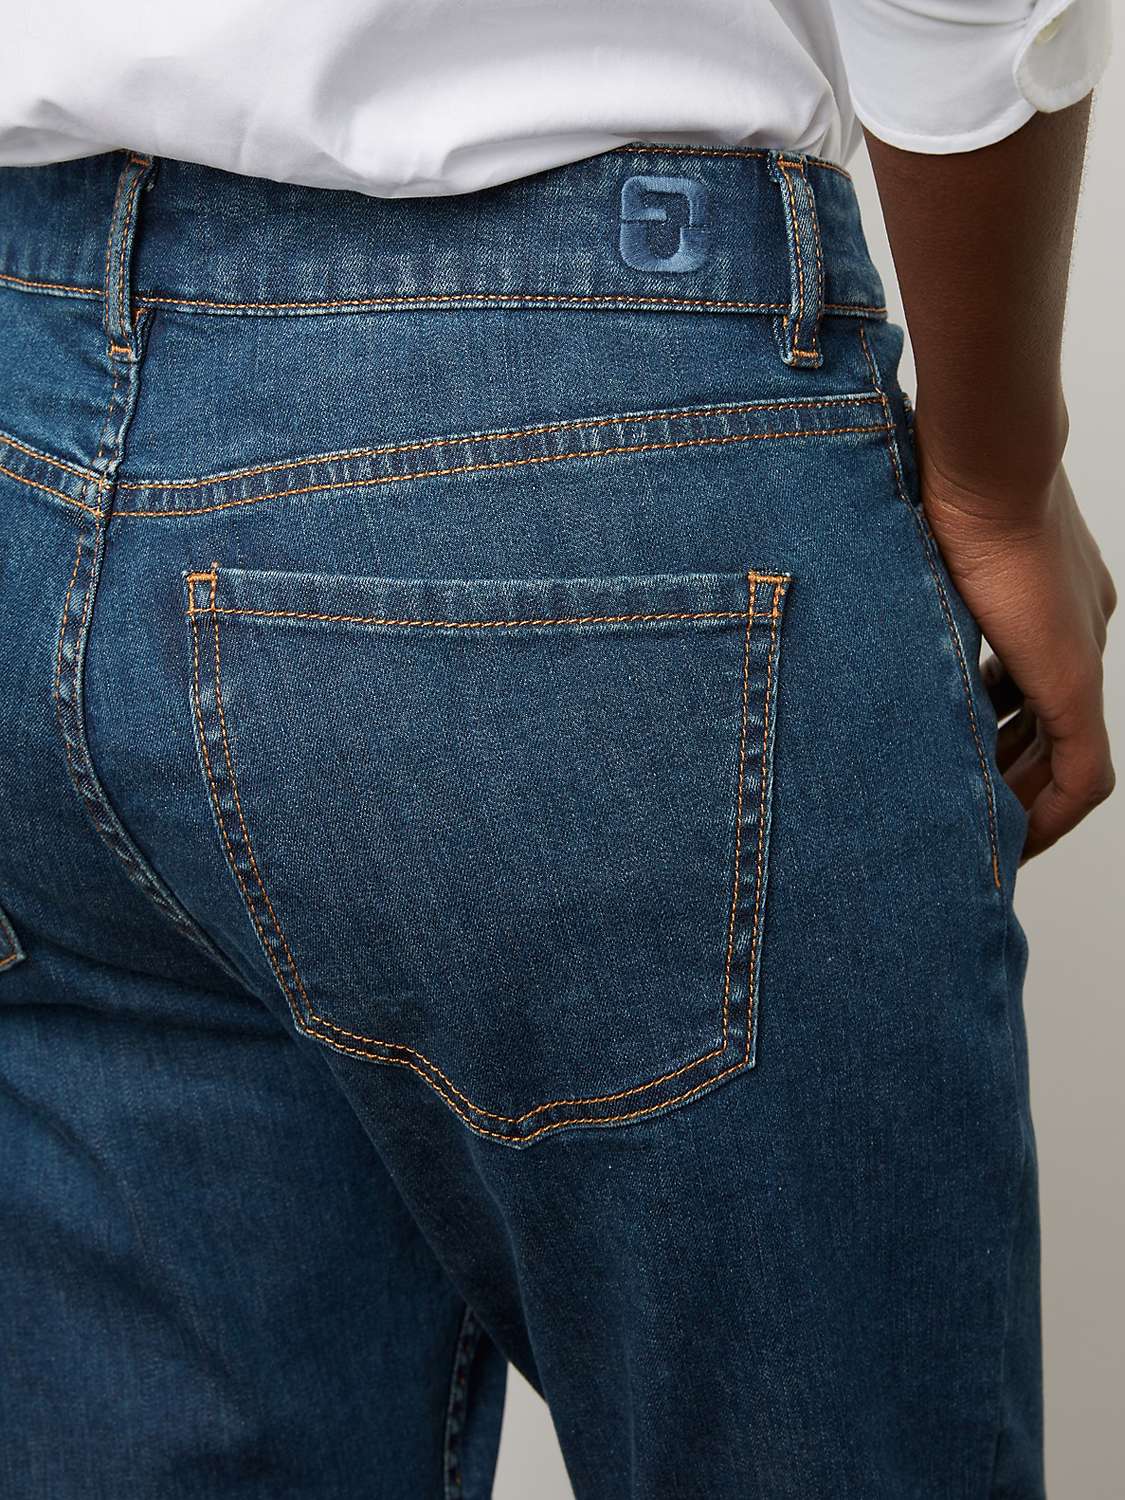 Buy Gerard Darel Cheryl Raw Denim Slim Leg Jeans, Blue Online at johnlewis.com